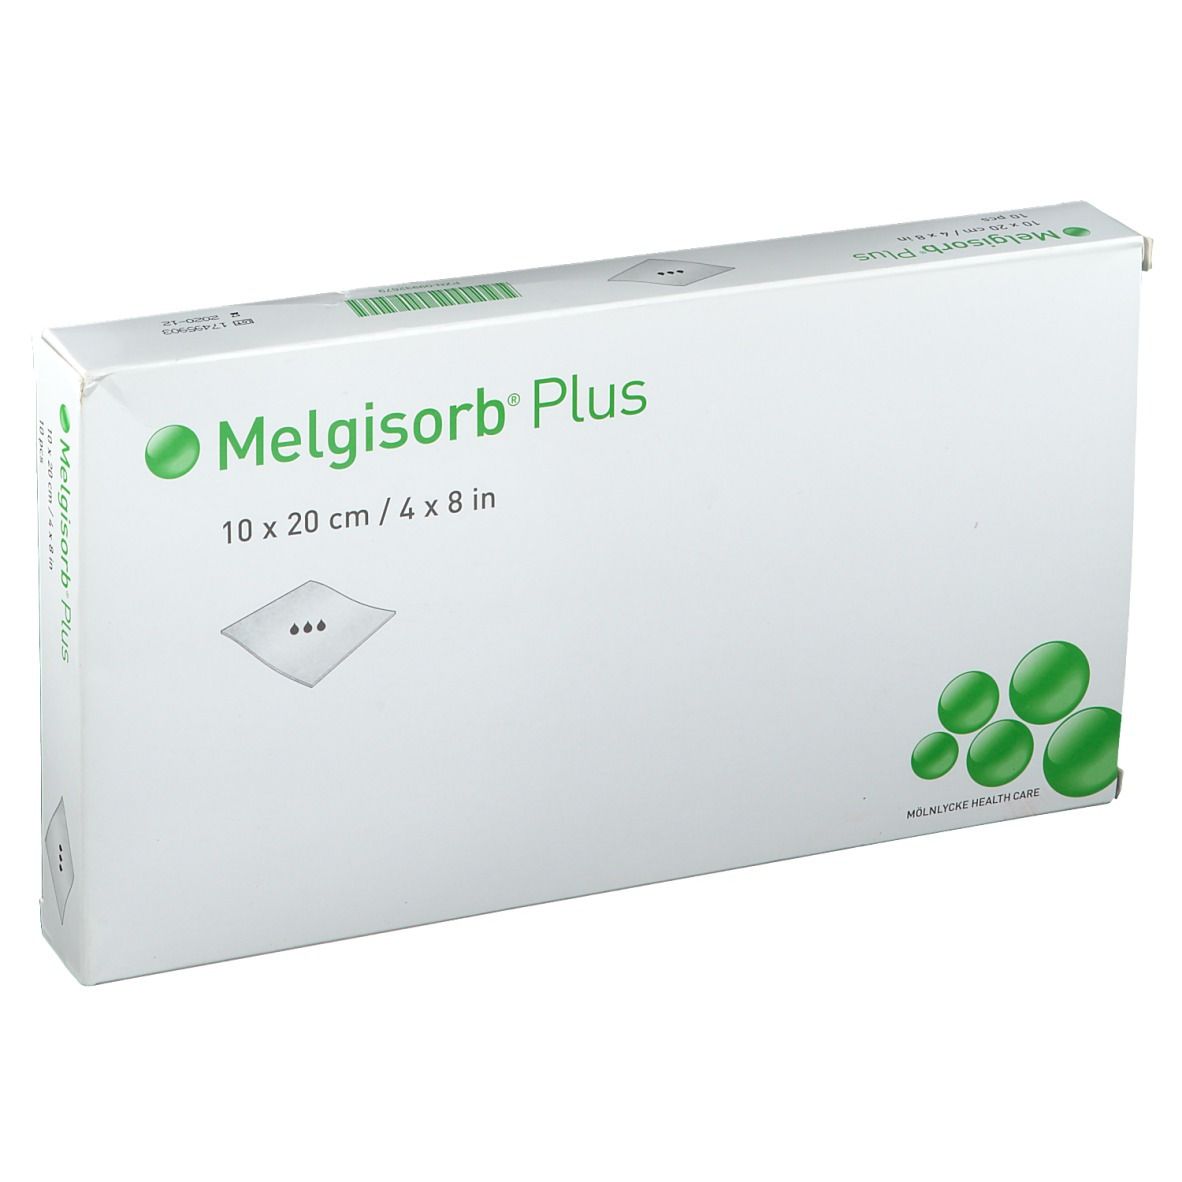 Melgisorb® Plus 10 x 20 cm